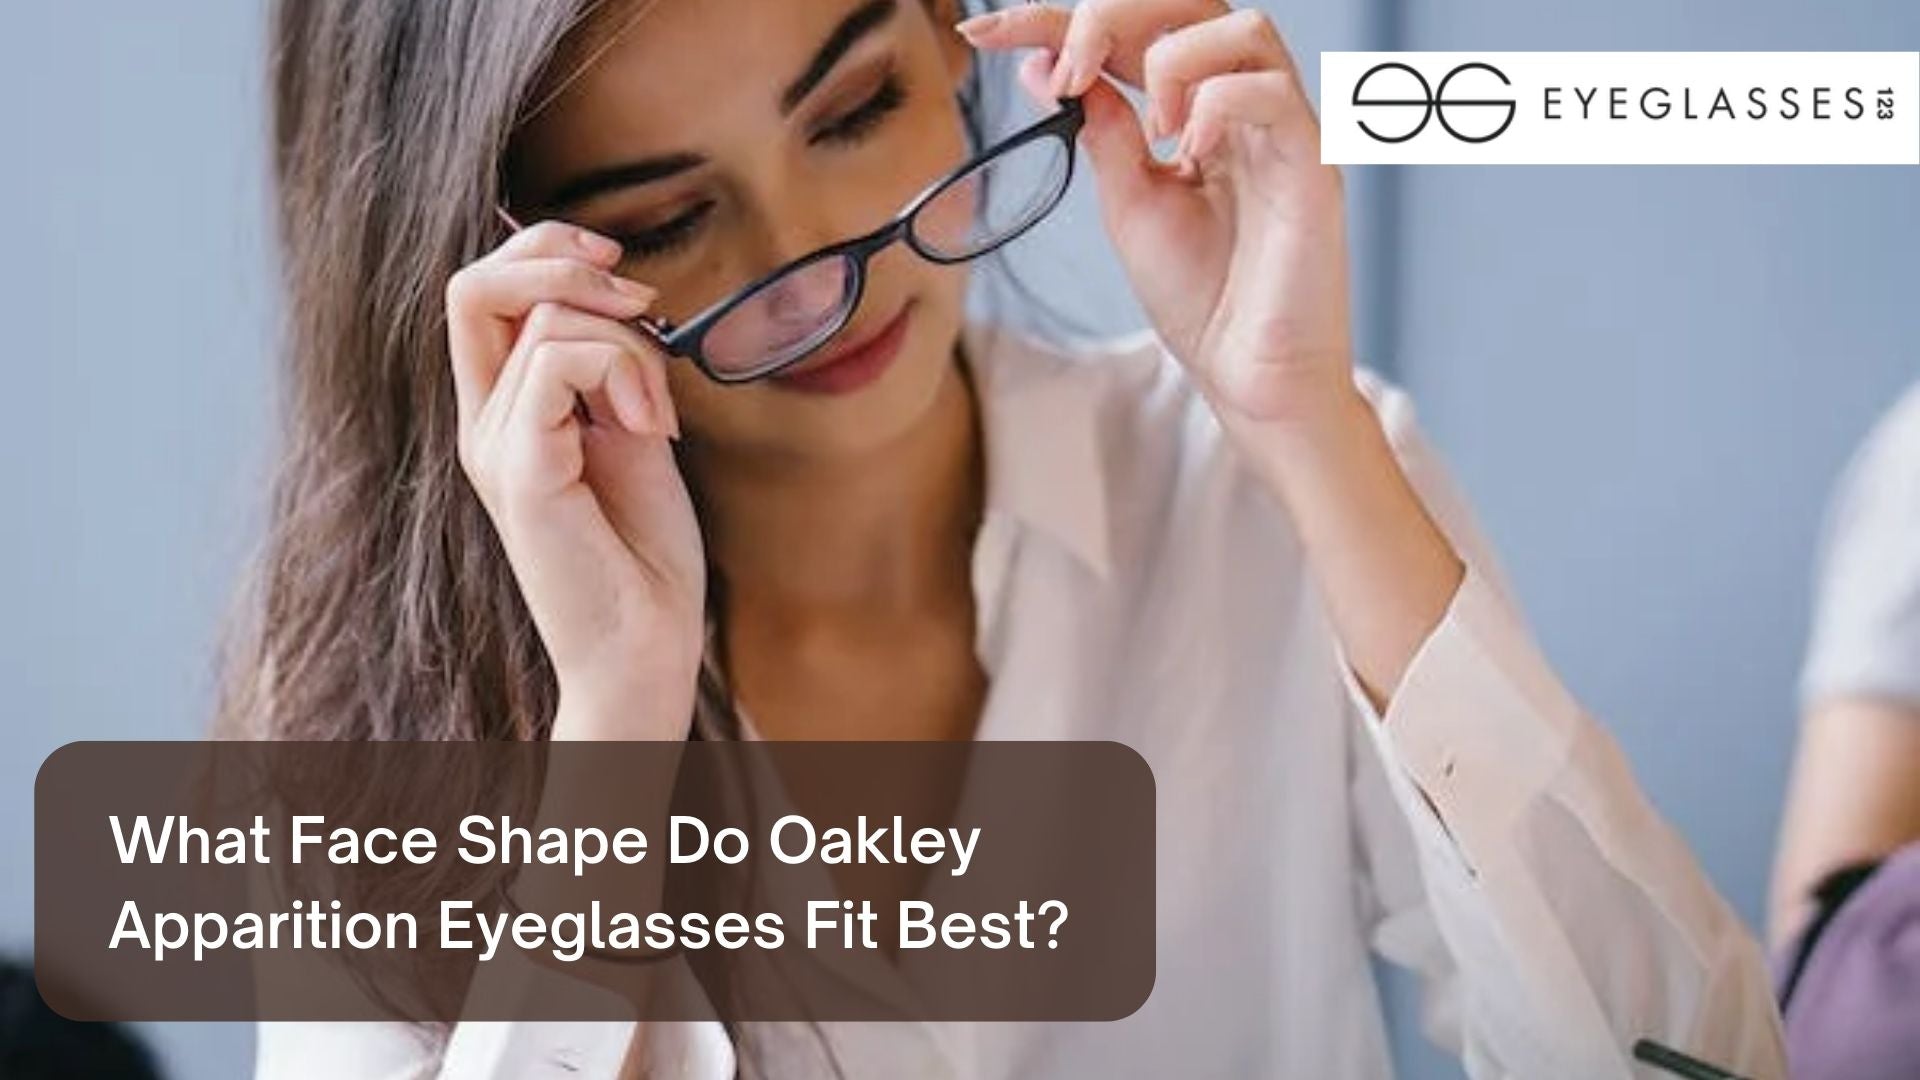 What Face Shape Do Oakley Apparition Eyeglasses Fit Best?